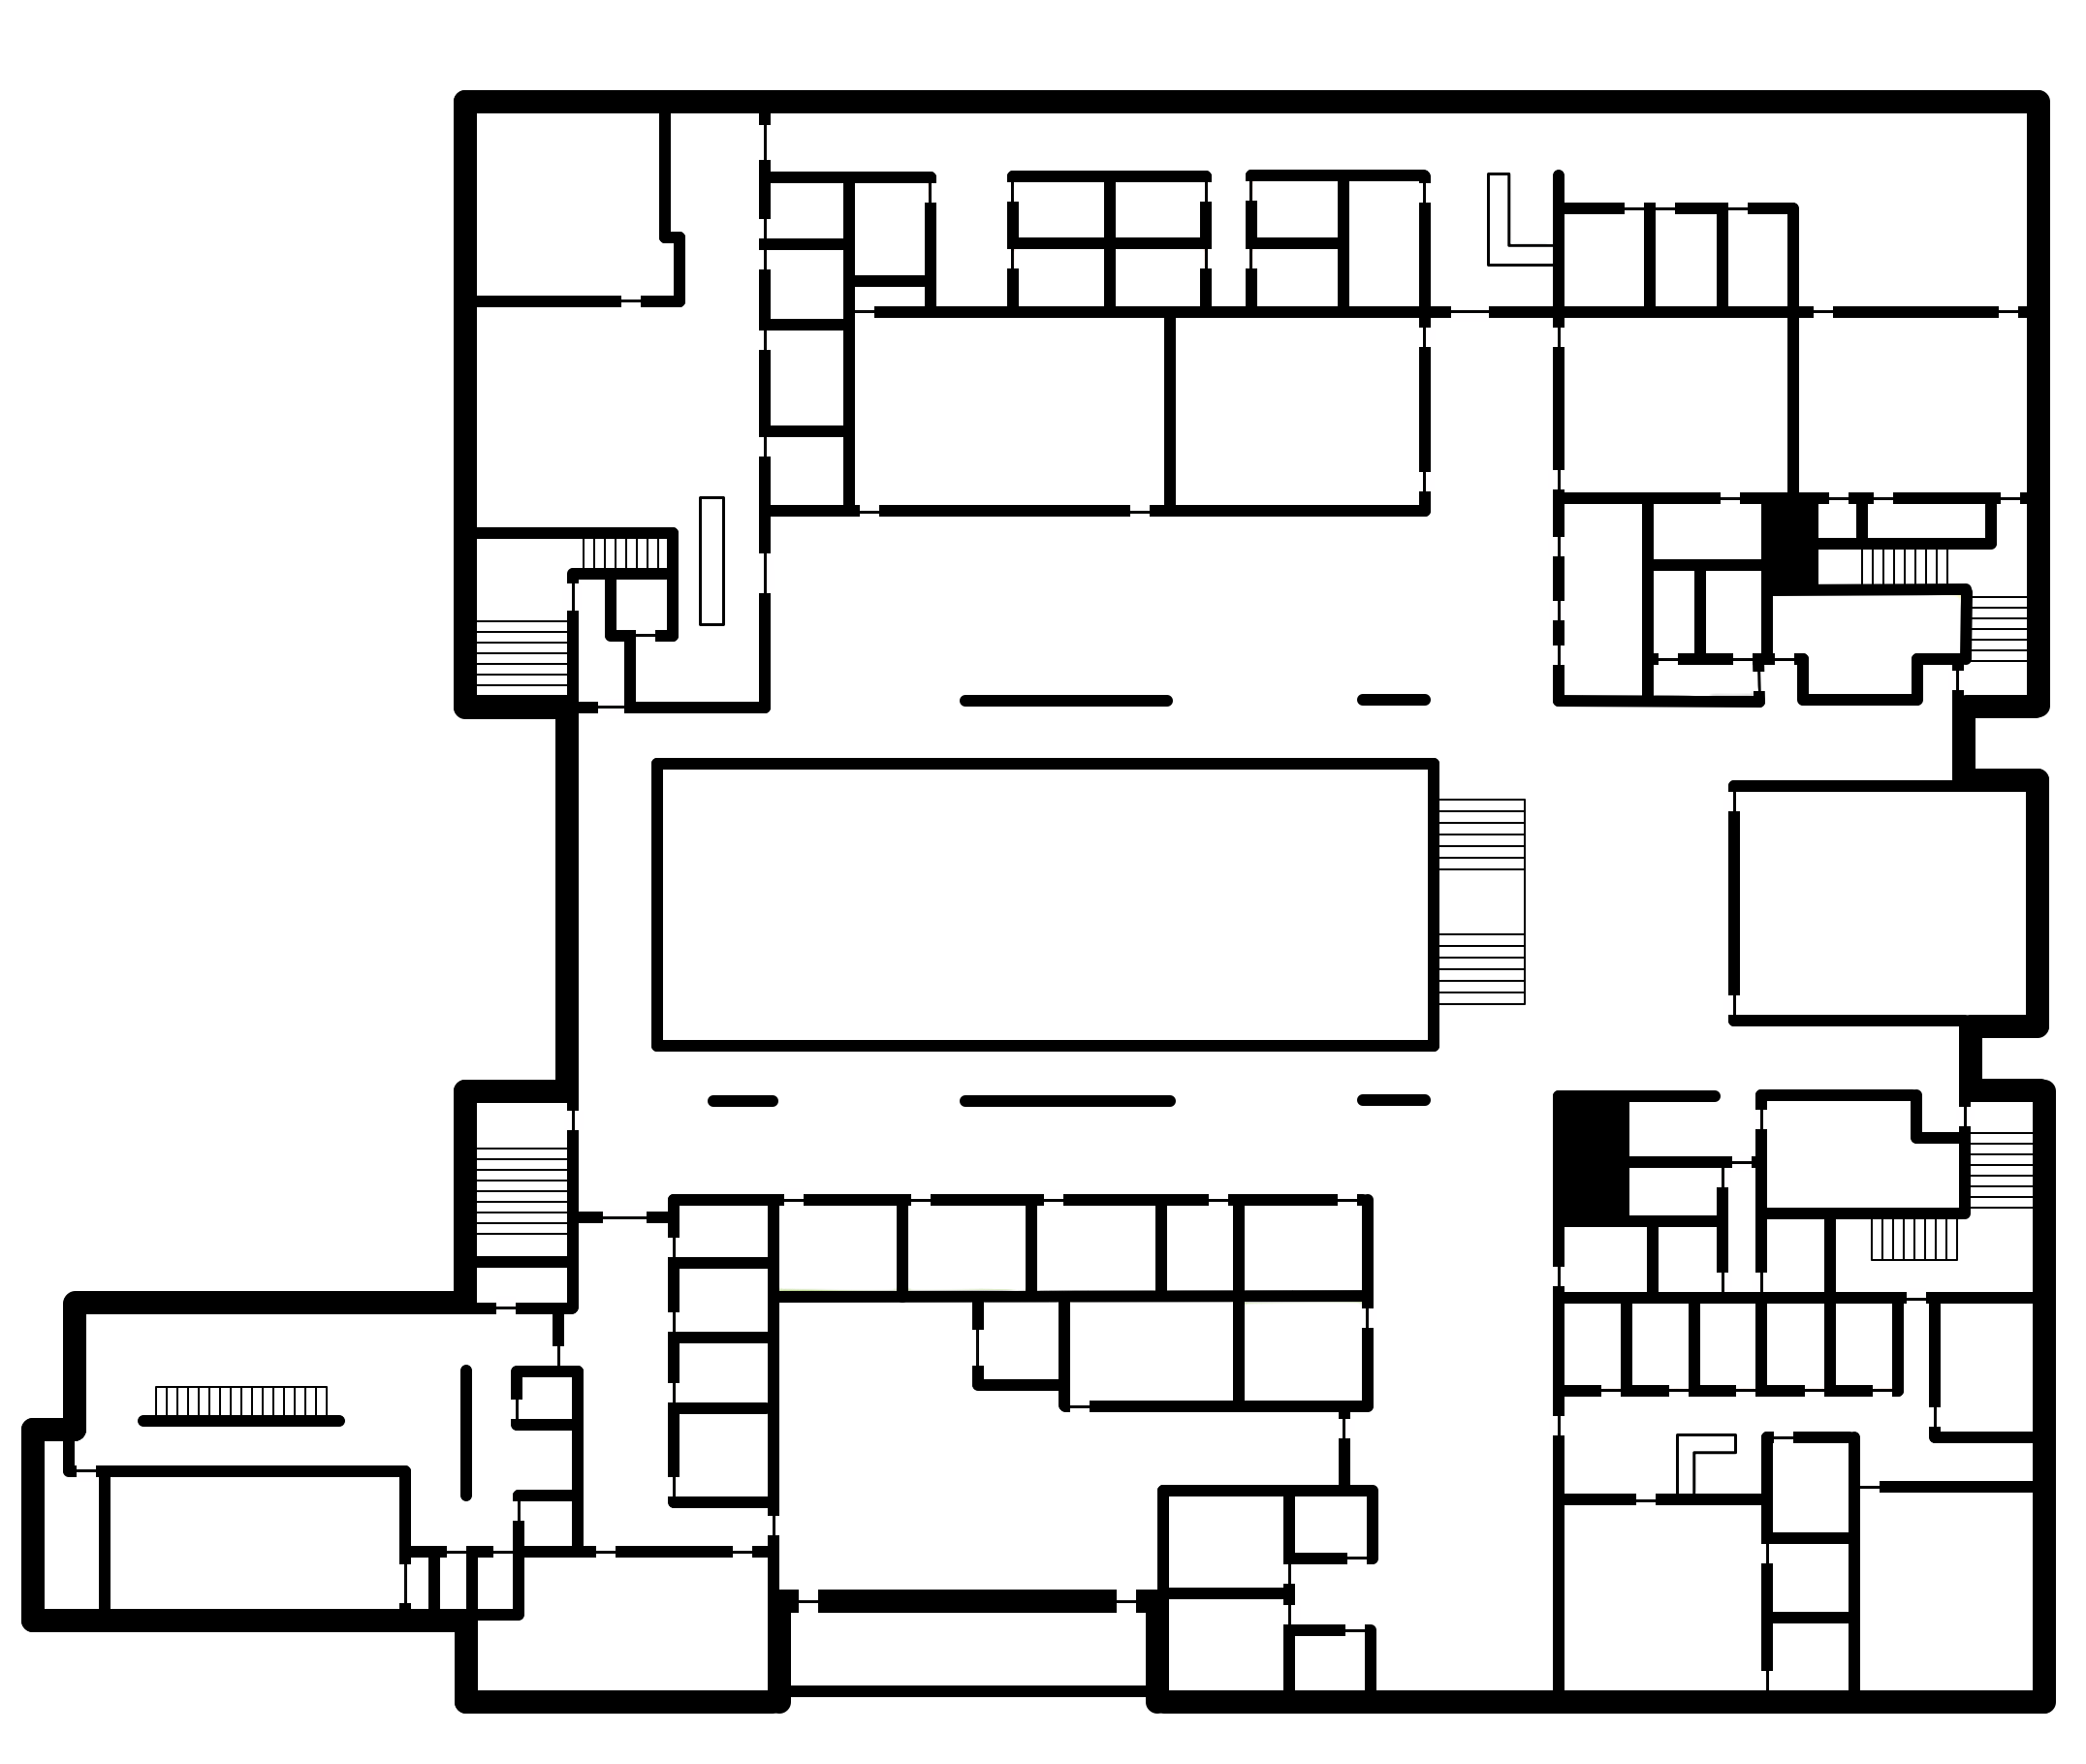 Floorplan of 